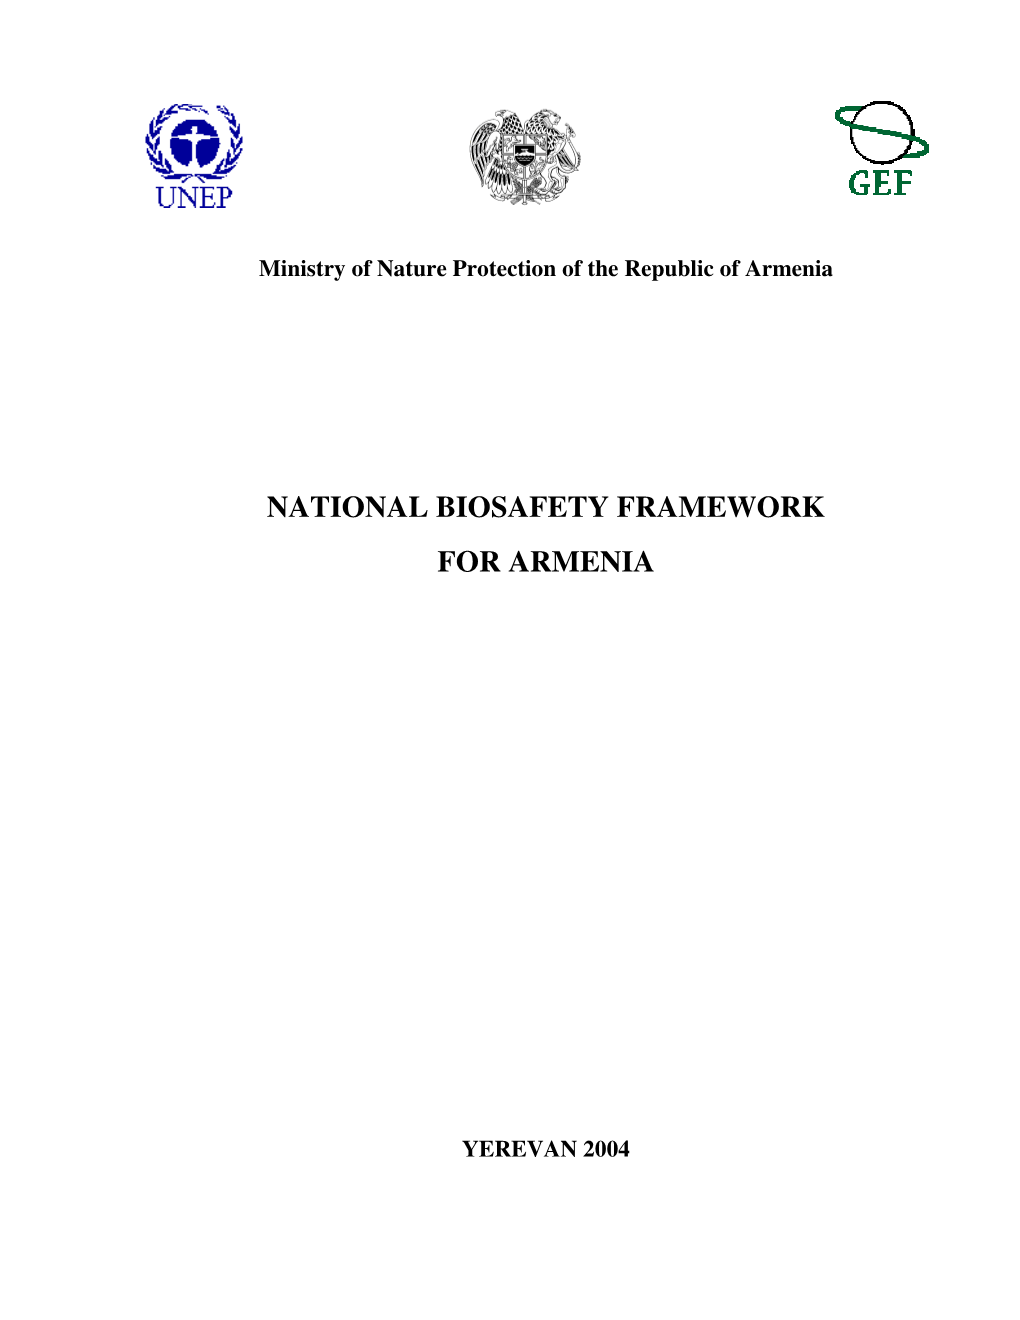 National Biosafety Framework for Armenia